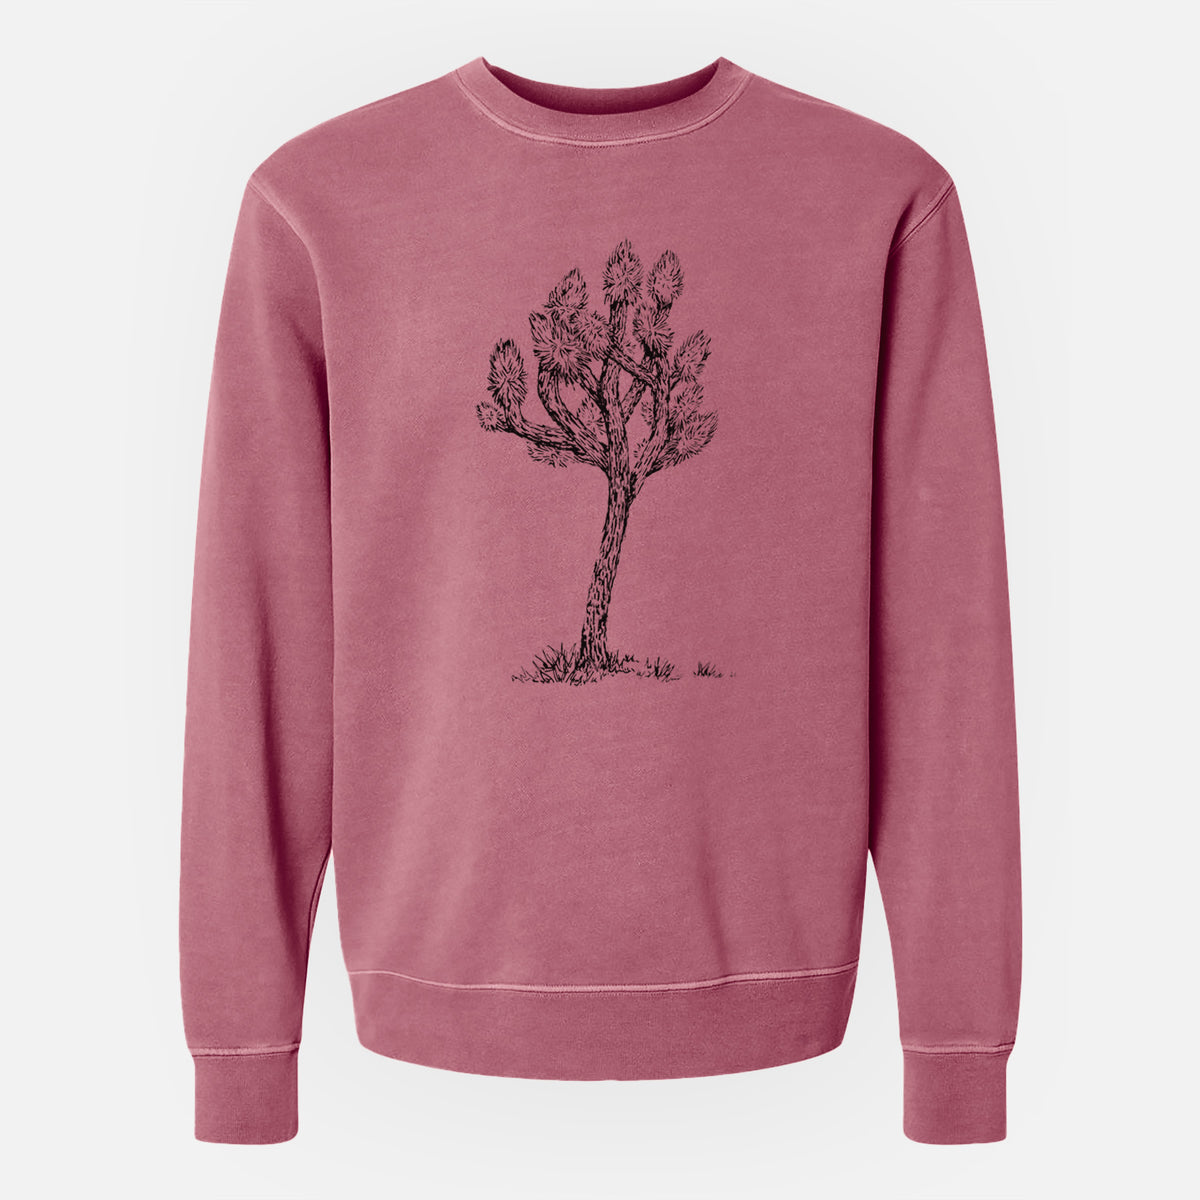 Yucca brevifolia - Joshua Tree - Unisex Pigment Dyed Crew Sweatshirt